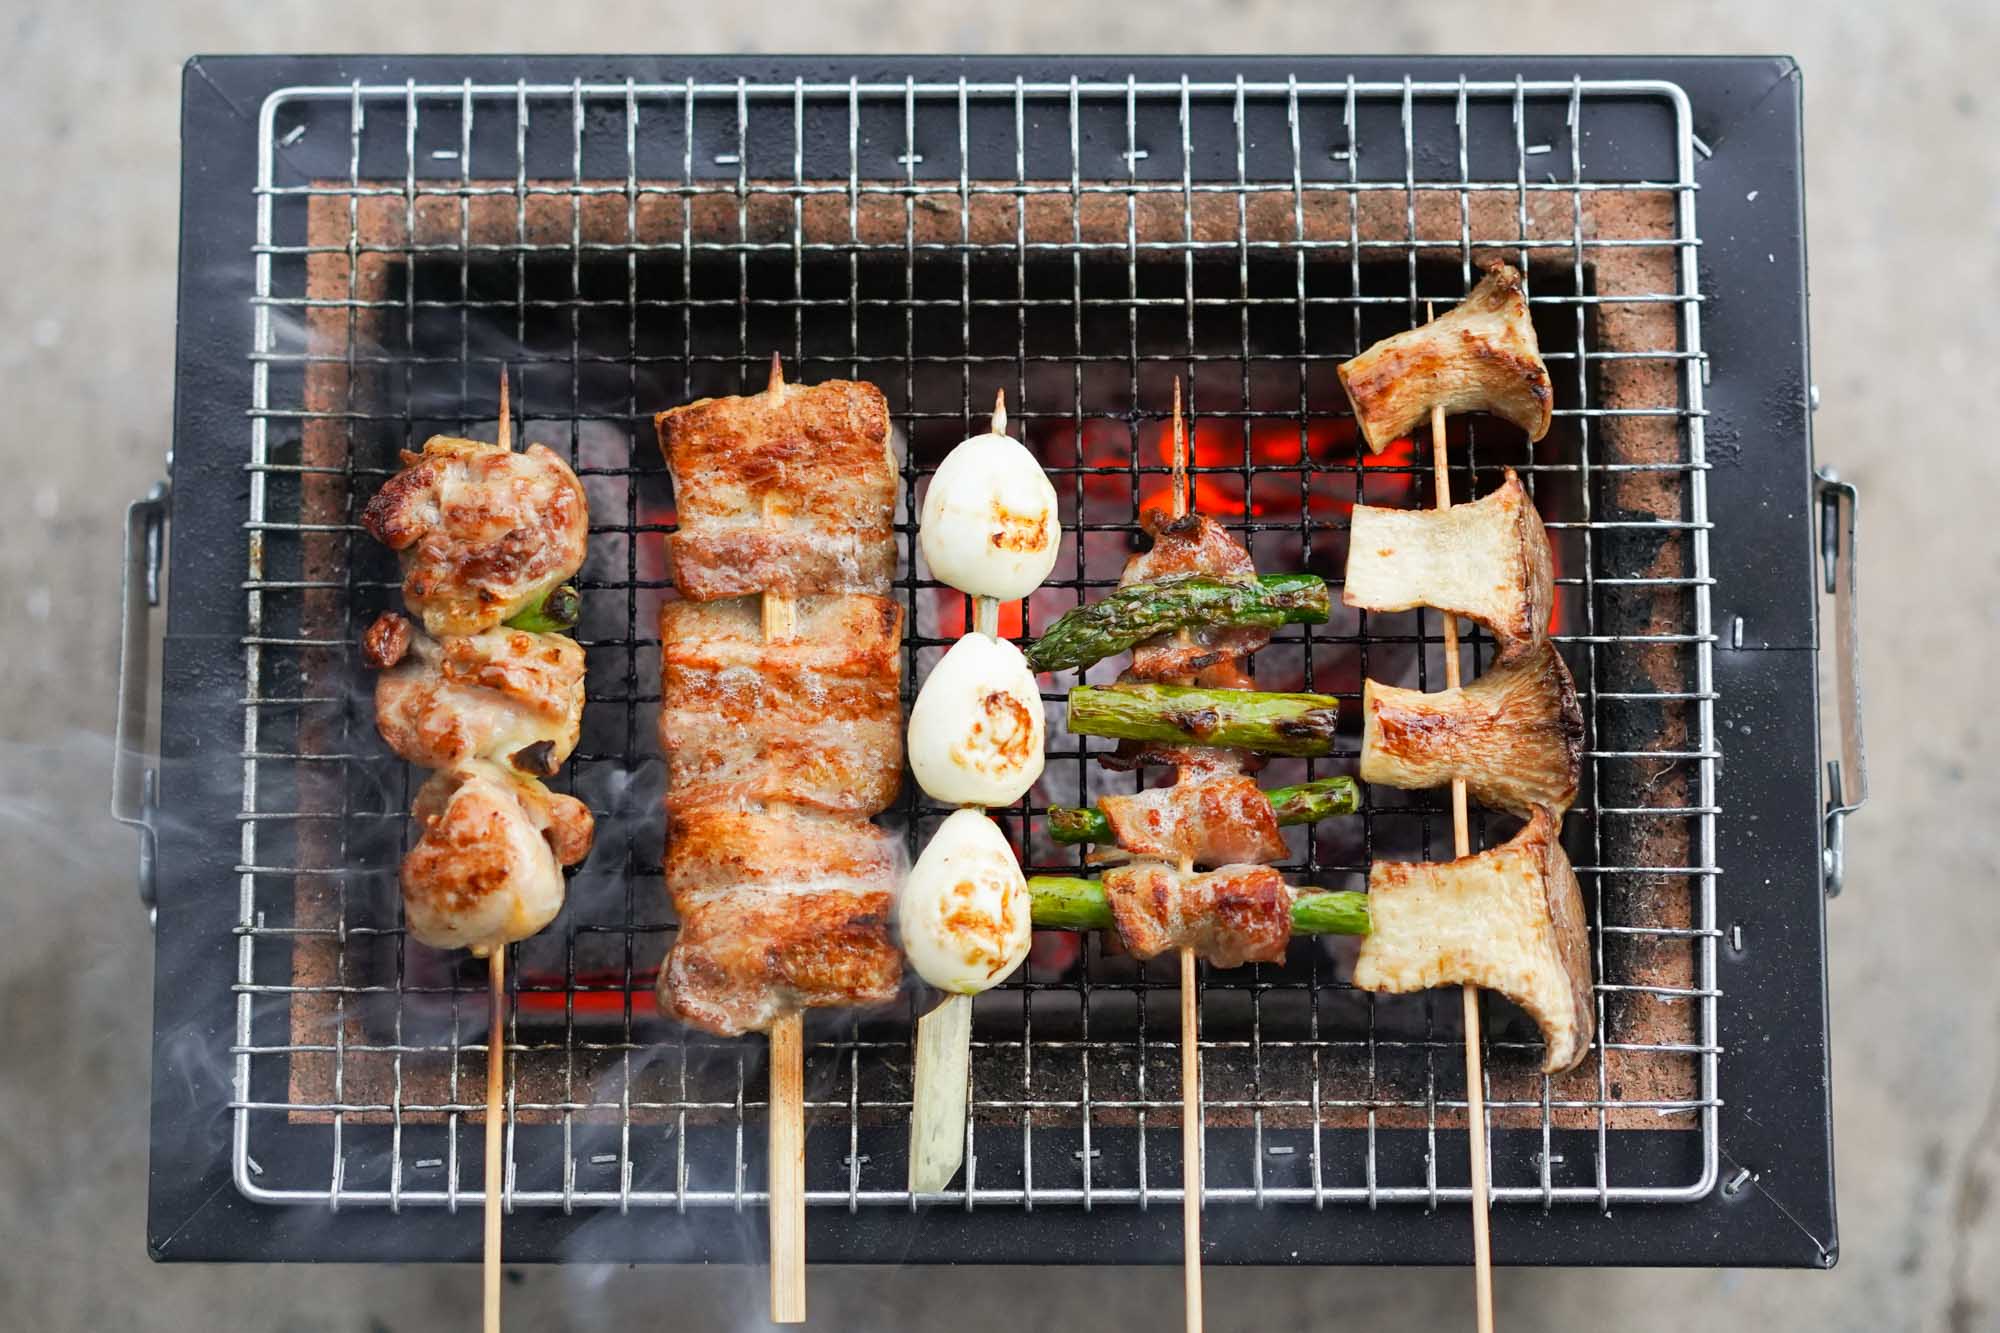 yakitori skewers on a smoky konro grill